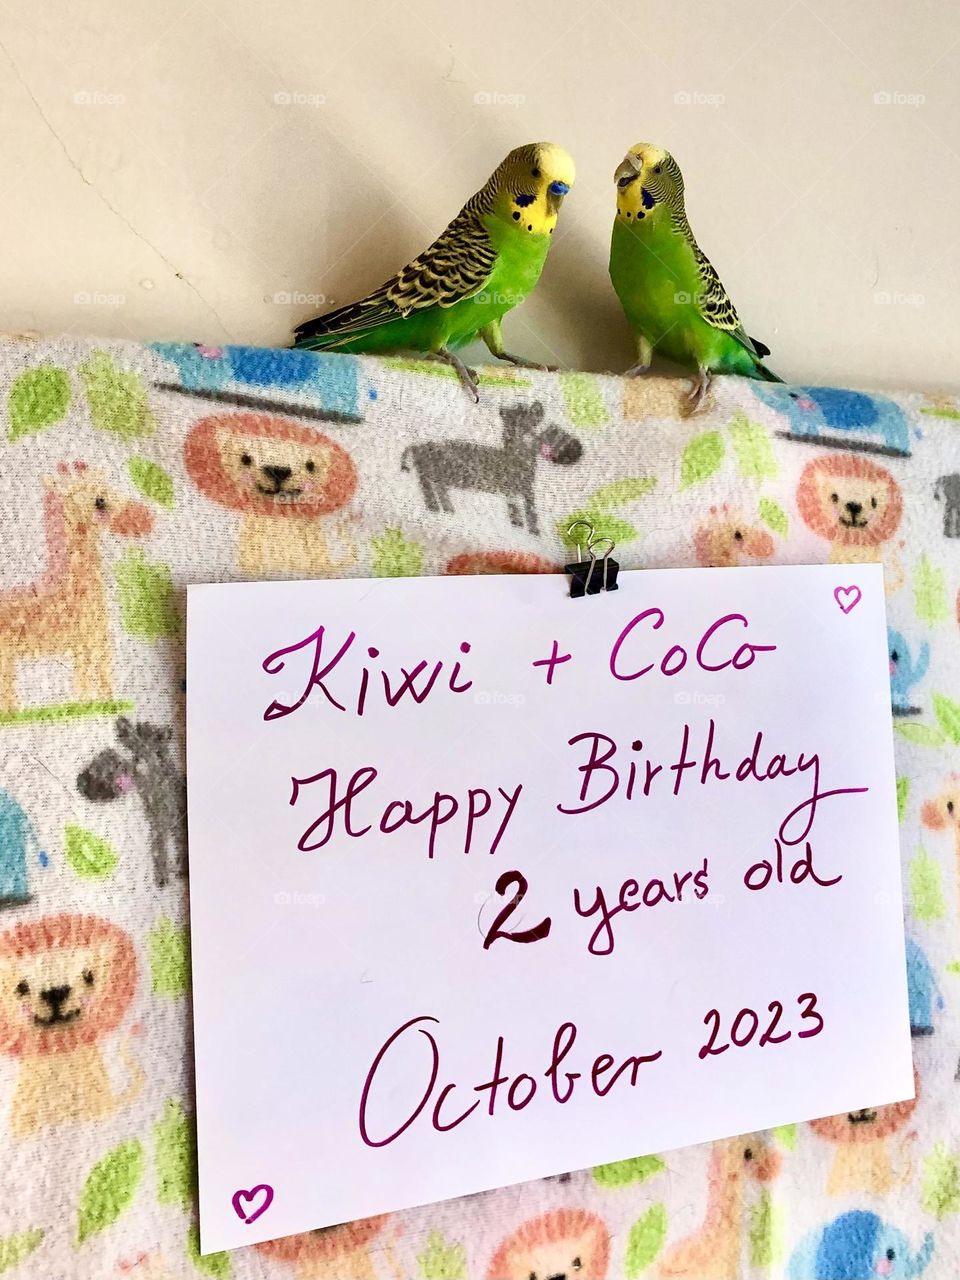 2 Years old Kiwi & Coco Birthday celebration 🎉